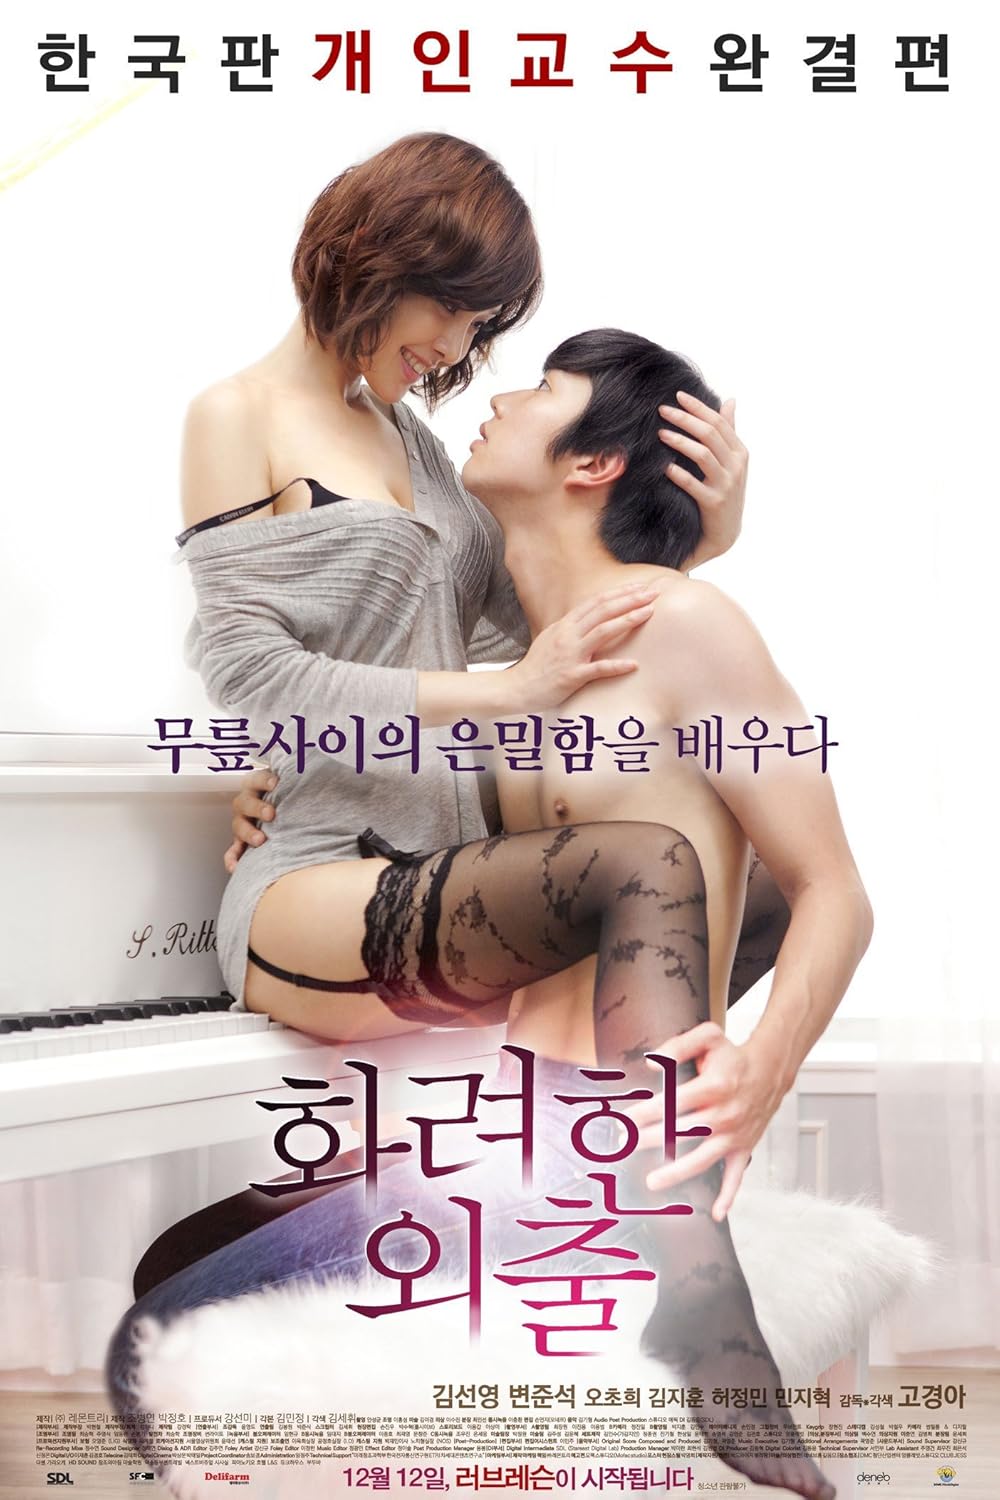 Best of Korean erotic movies online